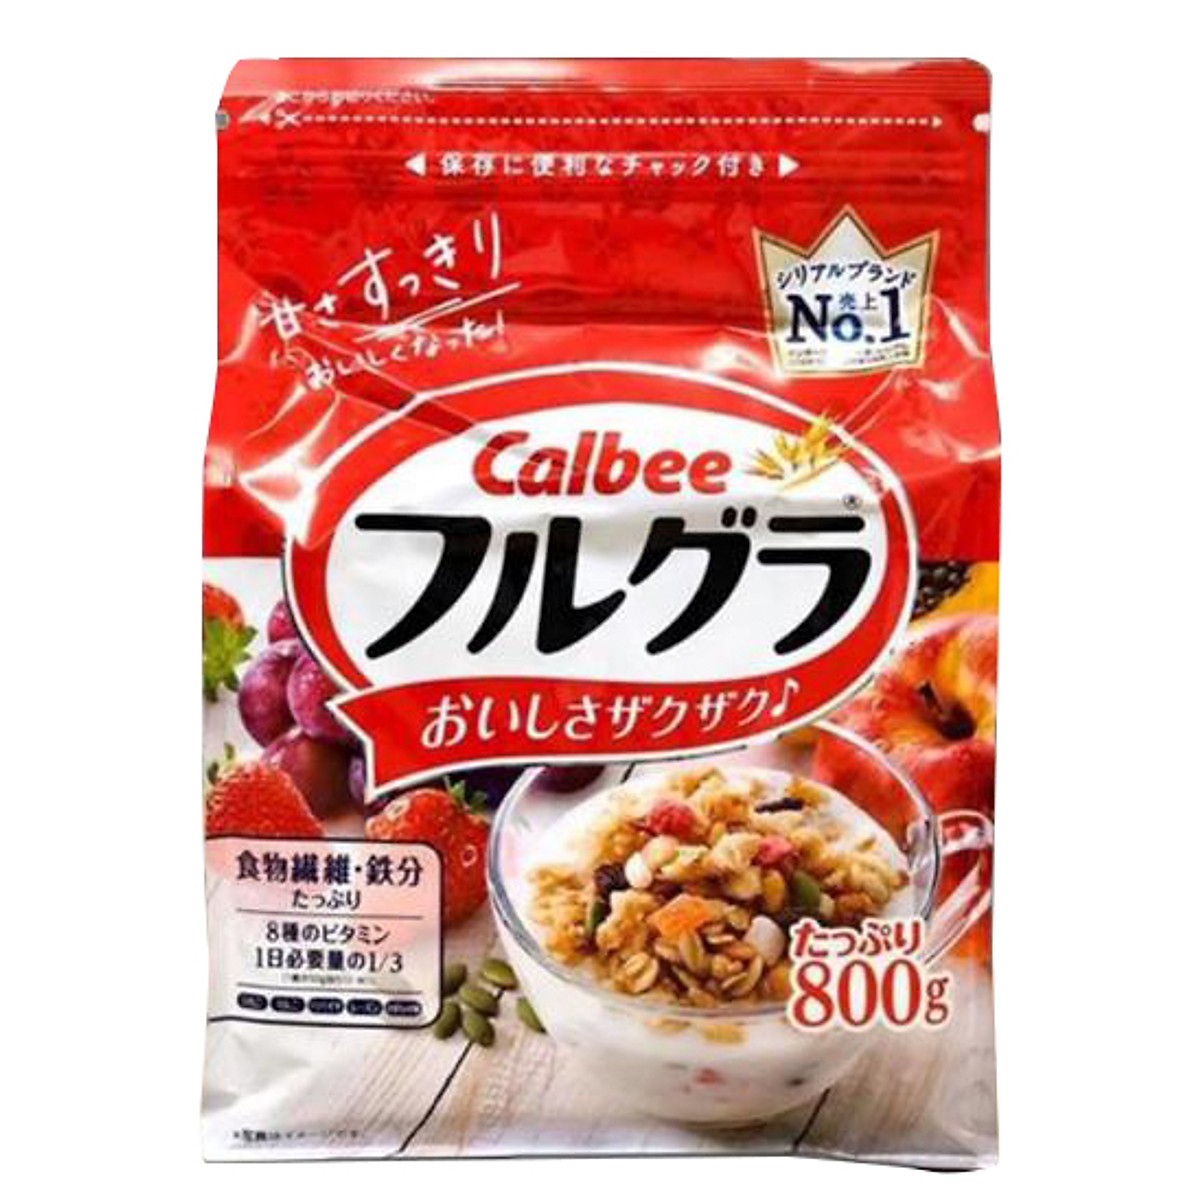 Ngũ cốc đỏ Calbee Nhật Bản